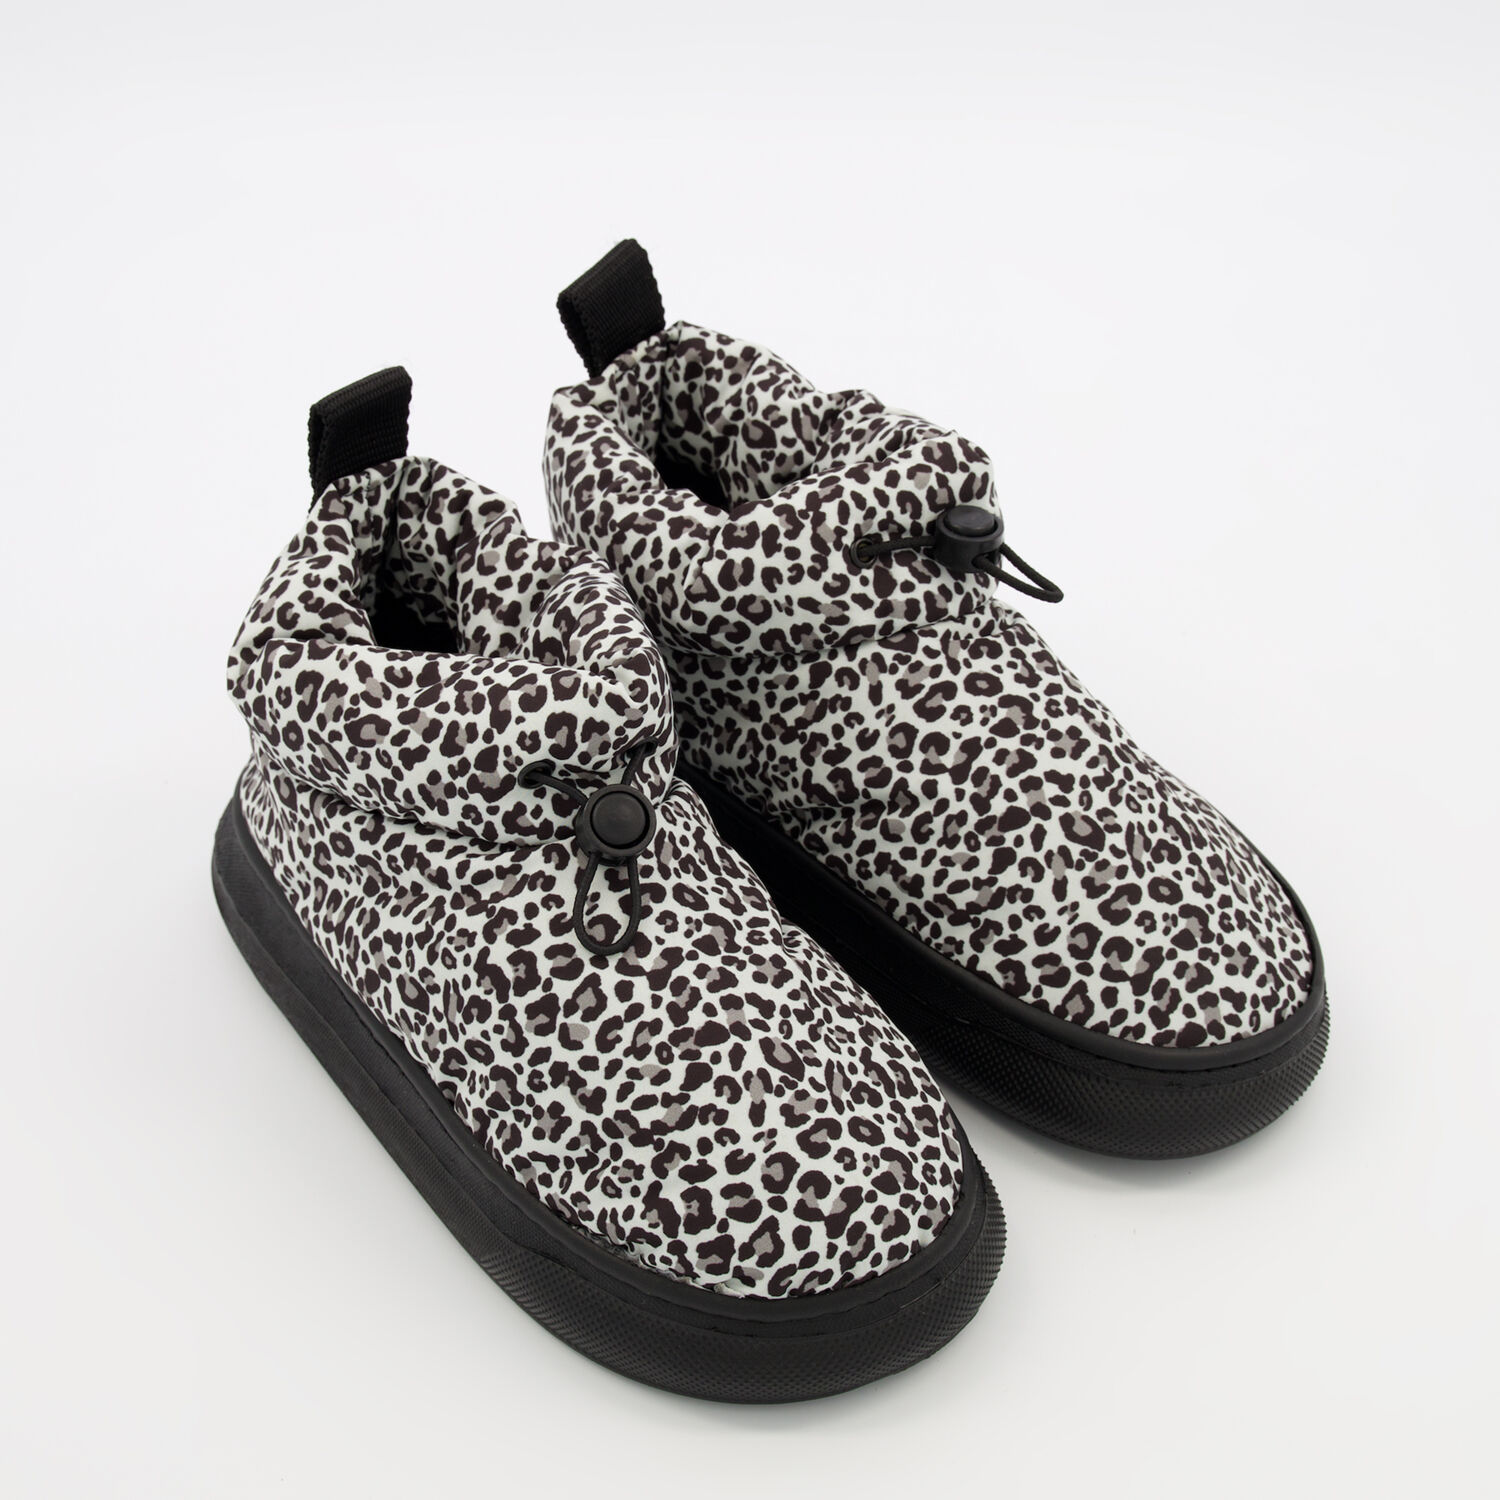 TK Maxx - Go wild with leopard print shoes just like Treasure